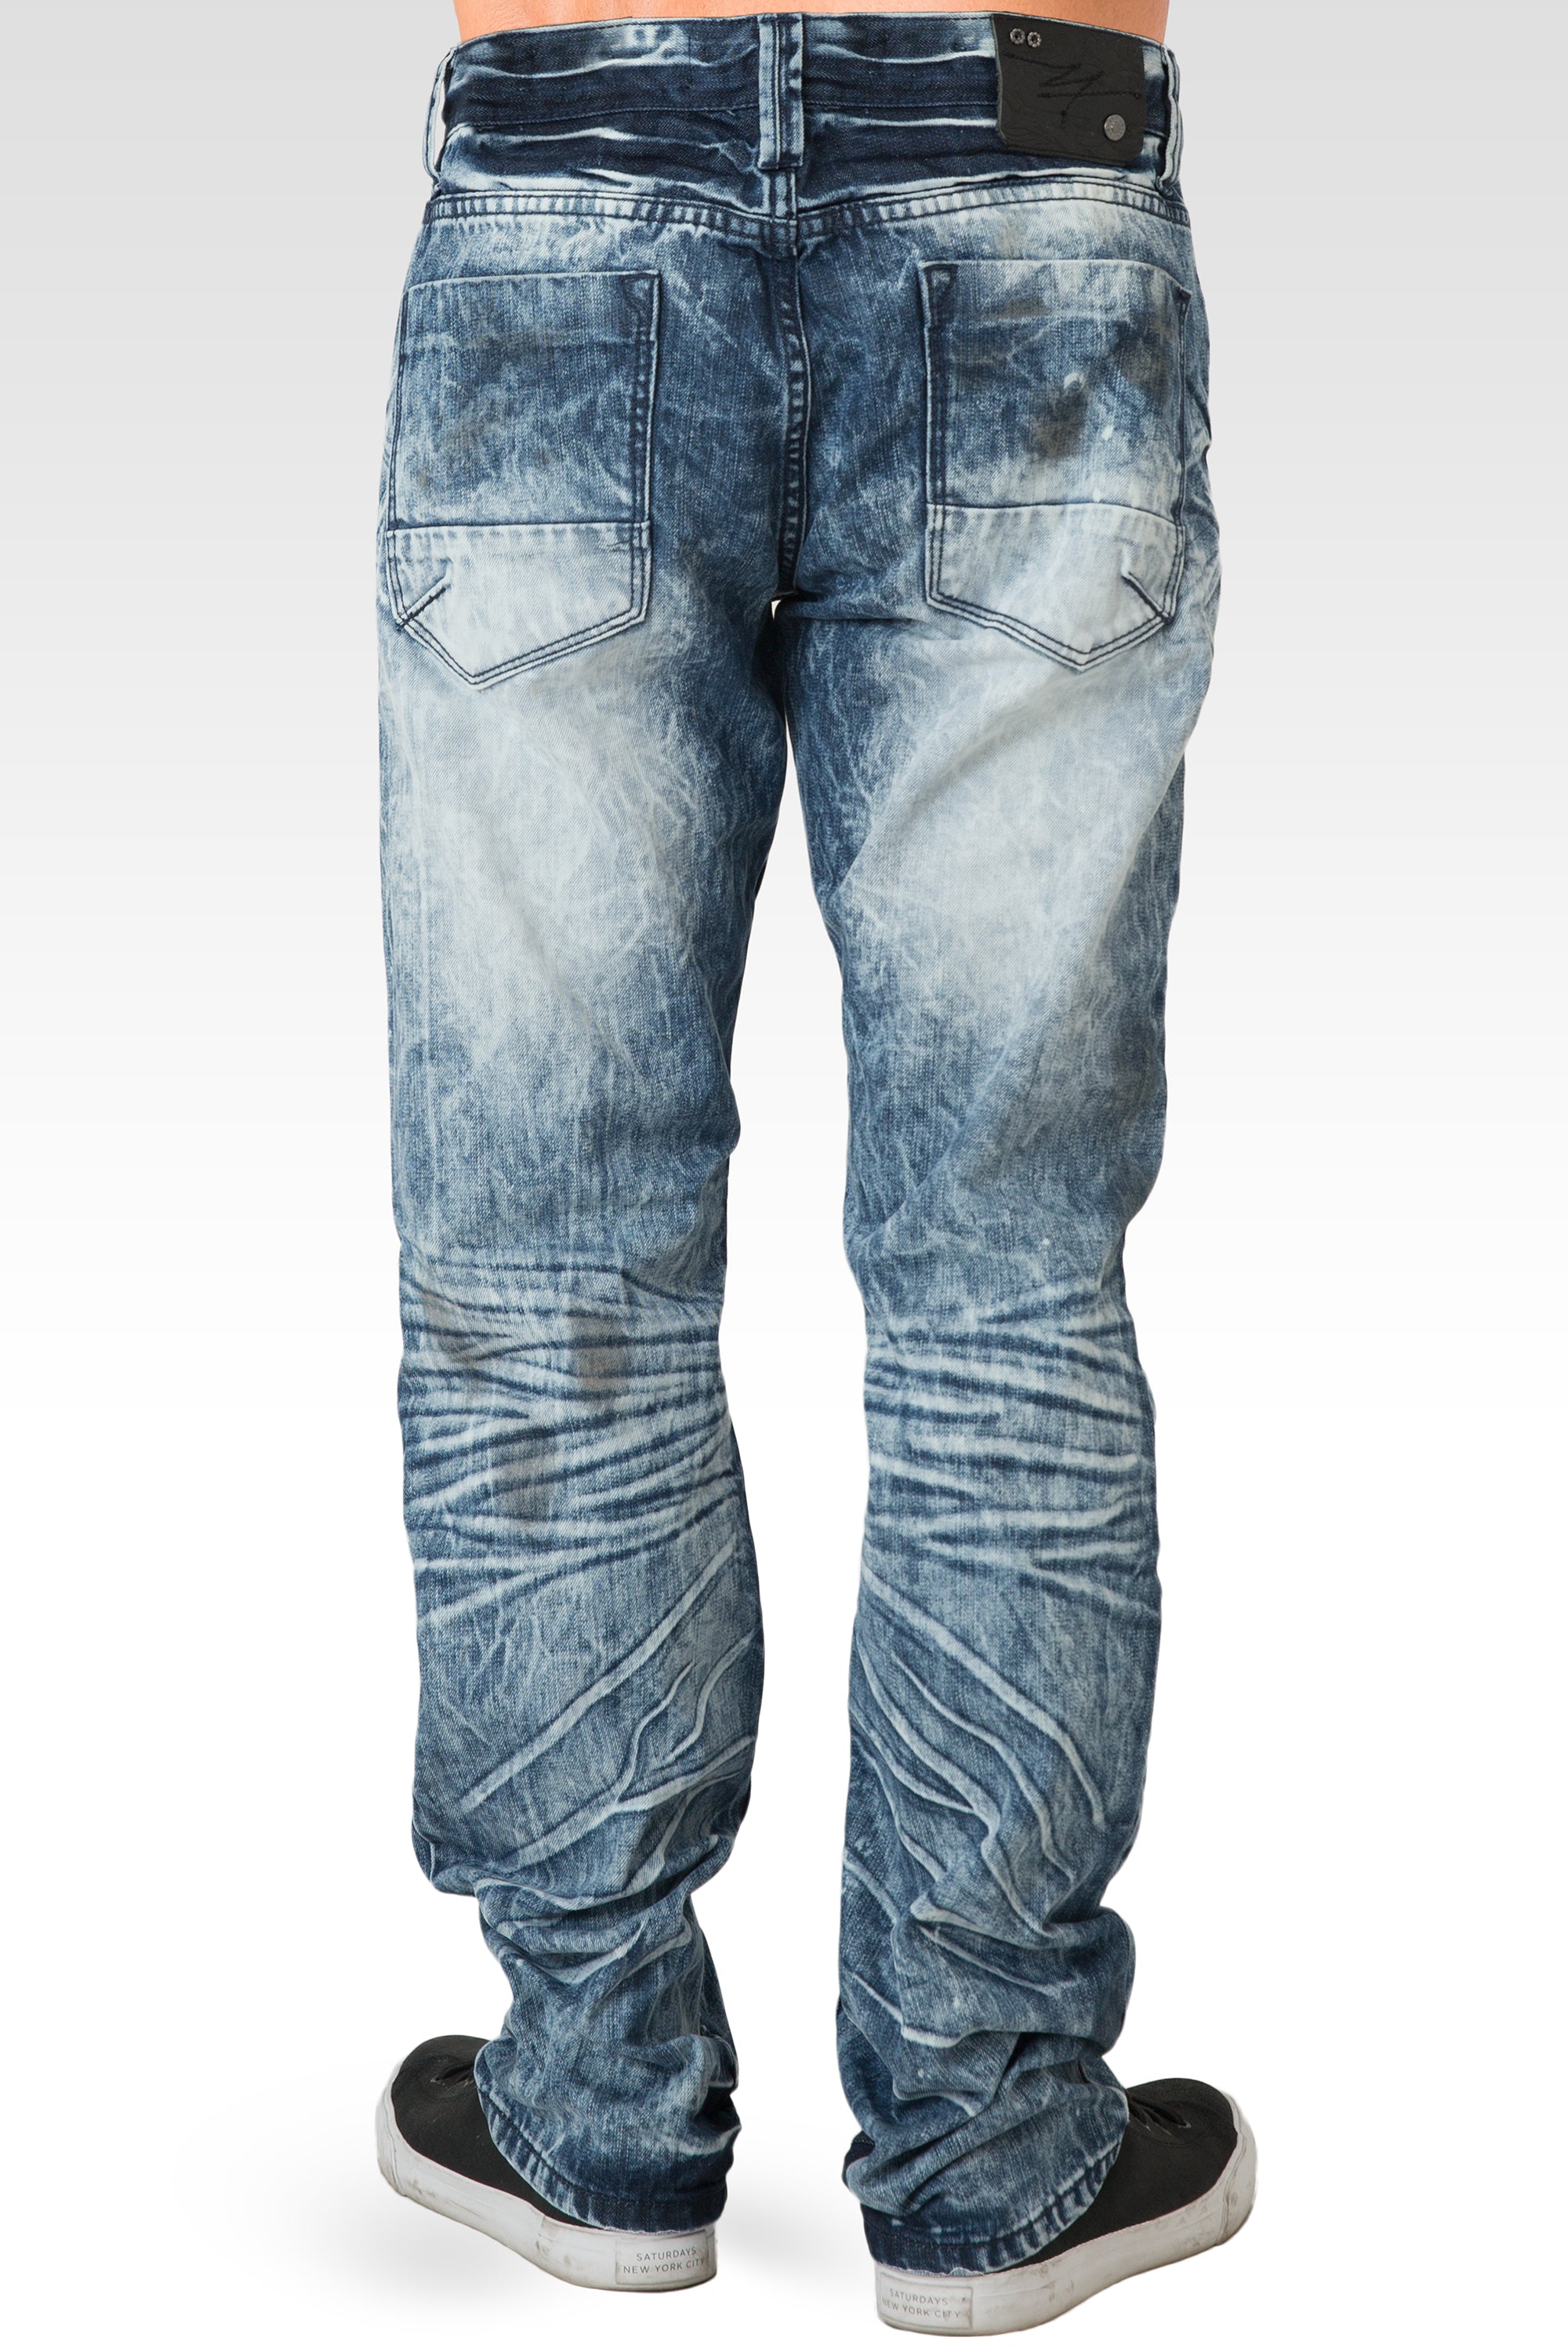 Buy U.S. Polo Assn. Denim Co. Men Light Blue Stone Wash Bootcut Jeans online